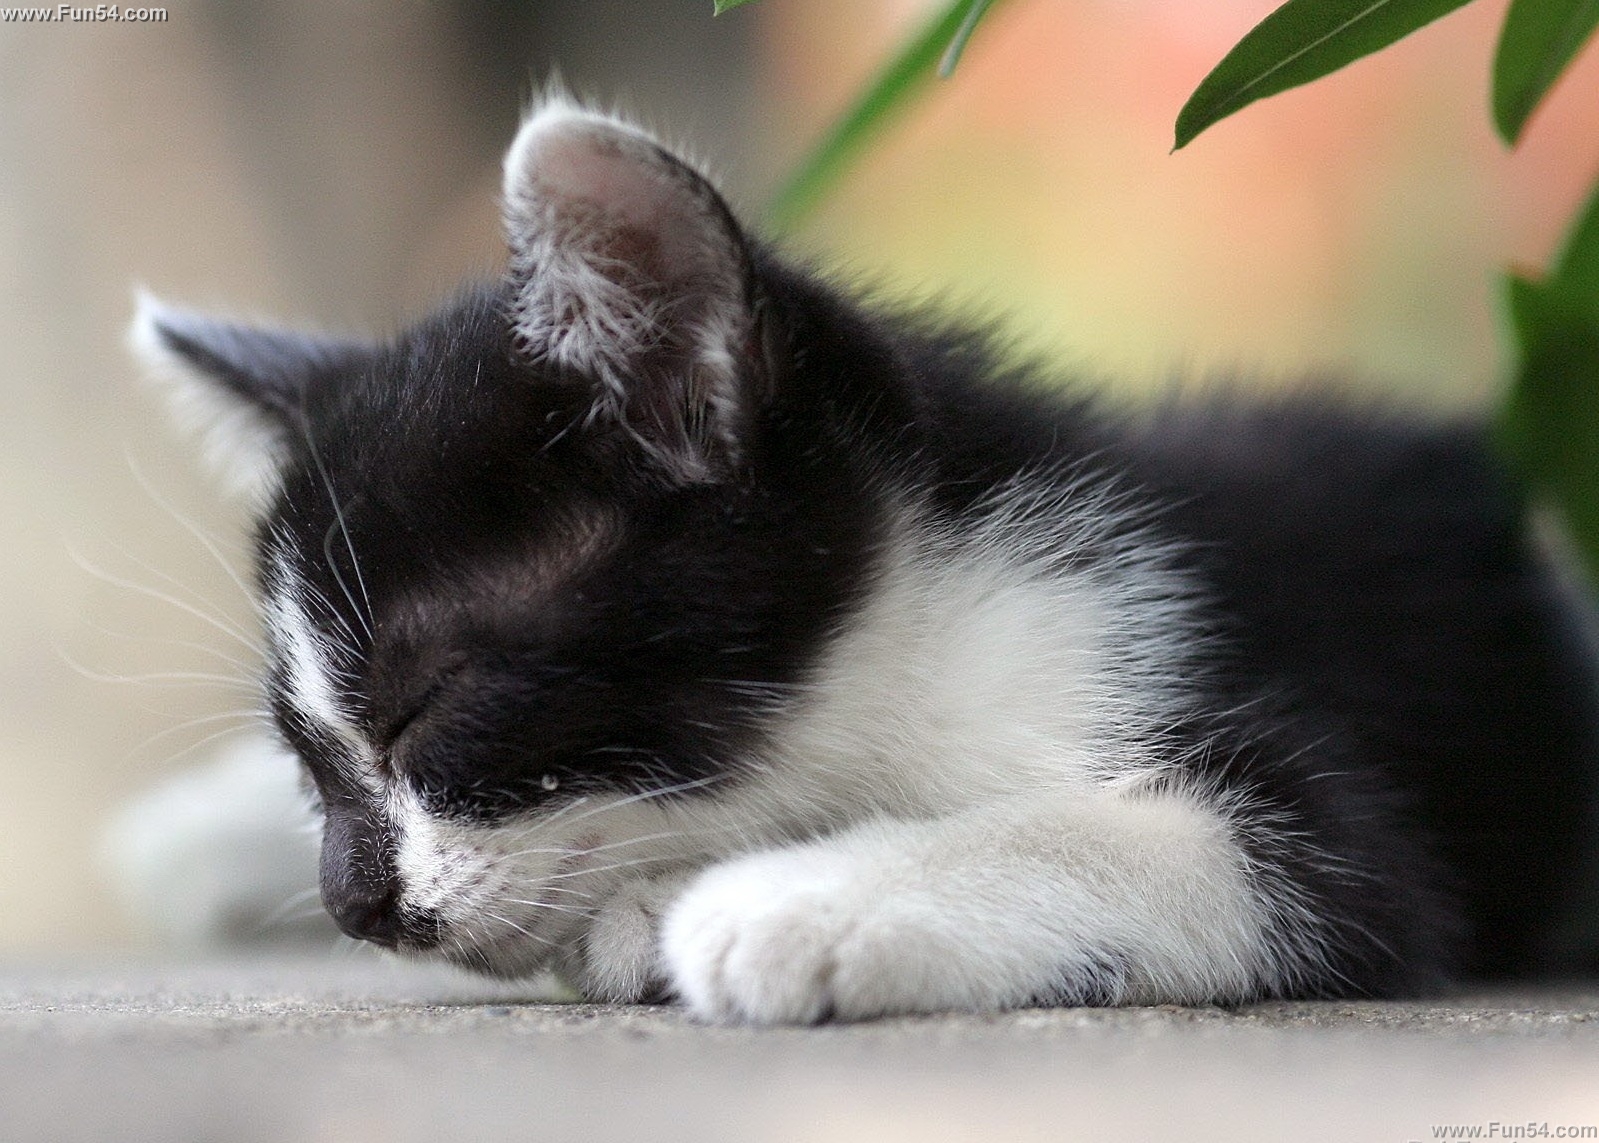 Cute Black White Cat Sleeping on the Ground Wallpaper